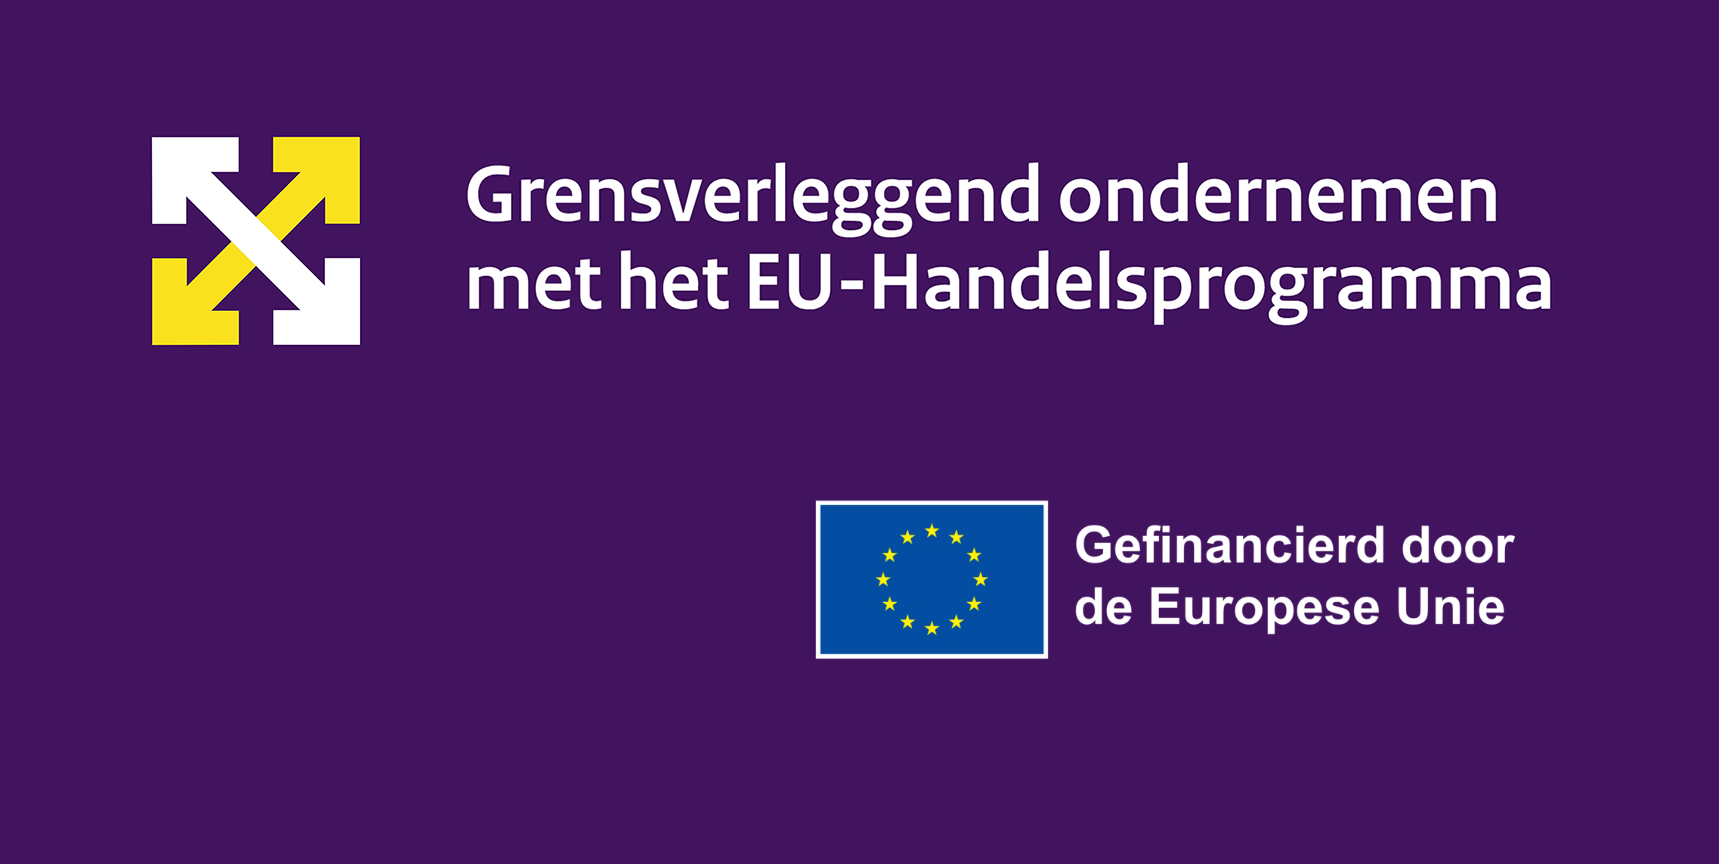 Logo EU-Handelsprogramma + logo EU + Gefinancierd door de Europese Unie